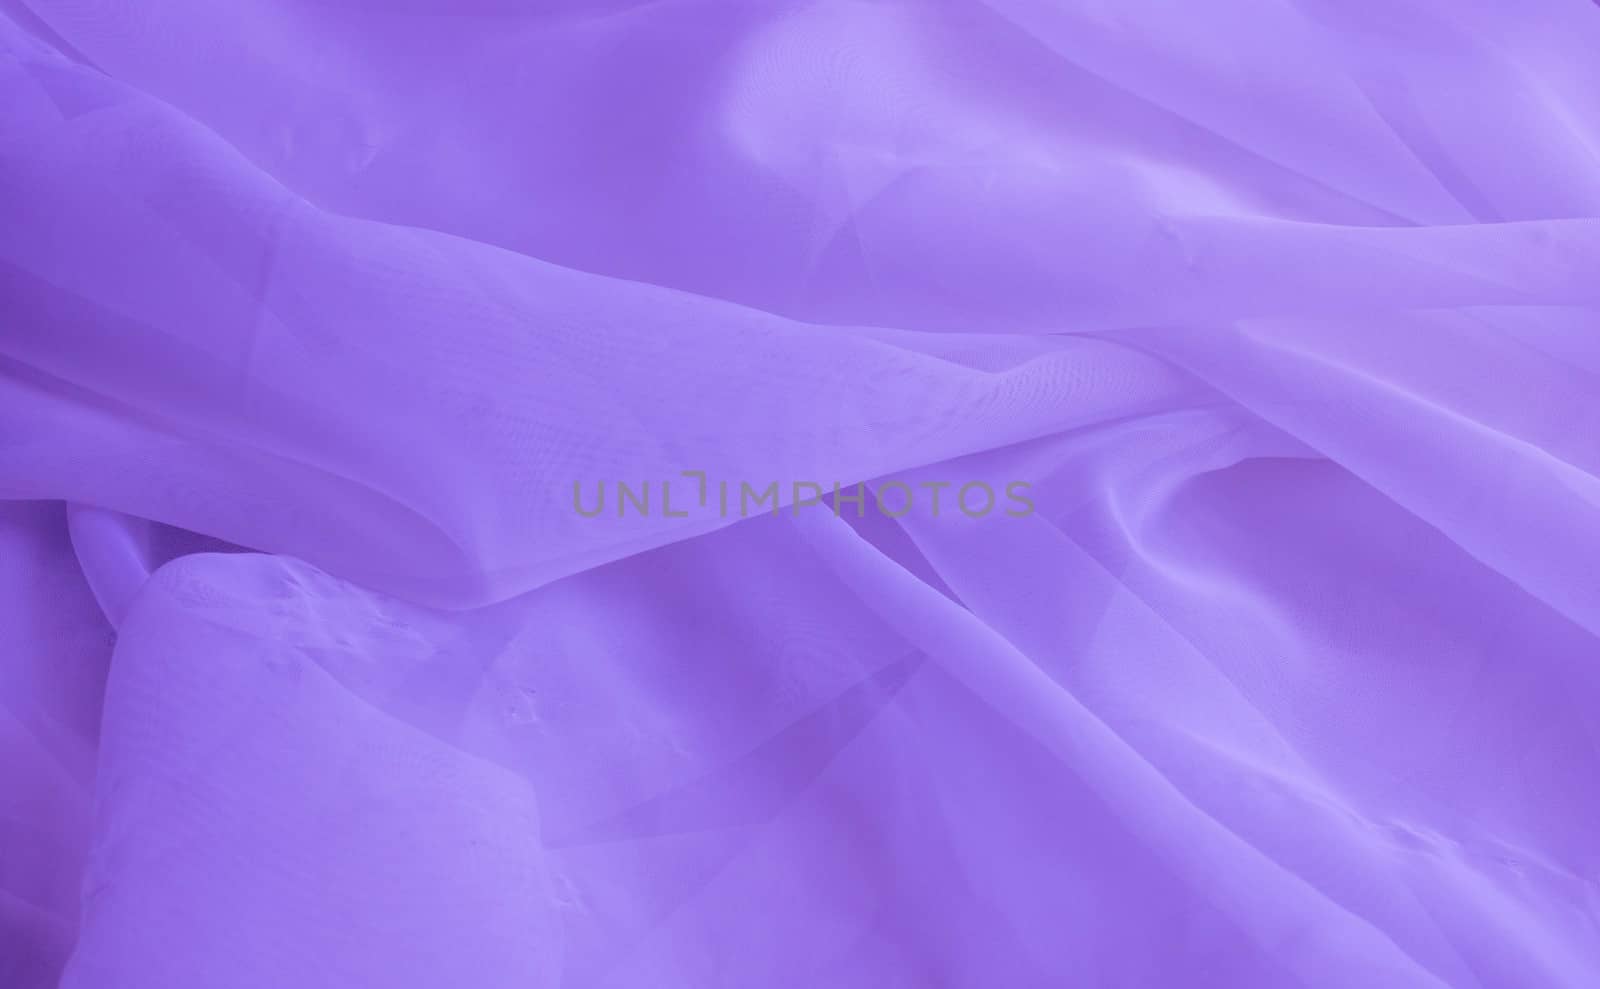 Texture, background, silk transparent fabric, lilac shade. by lapushka62